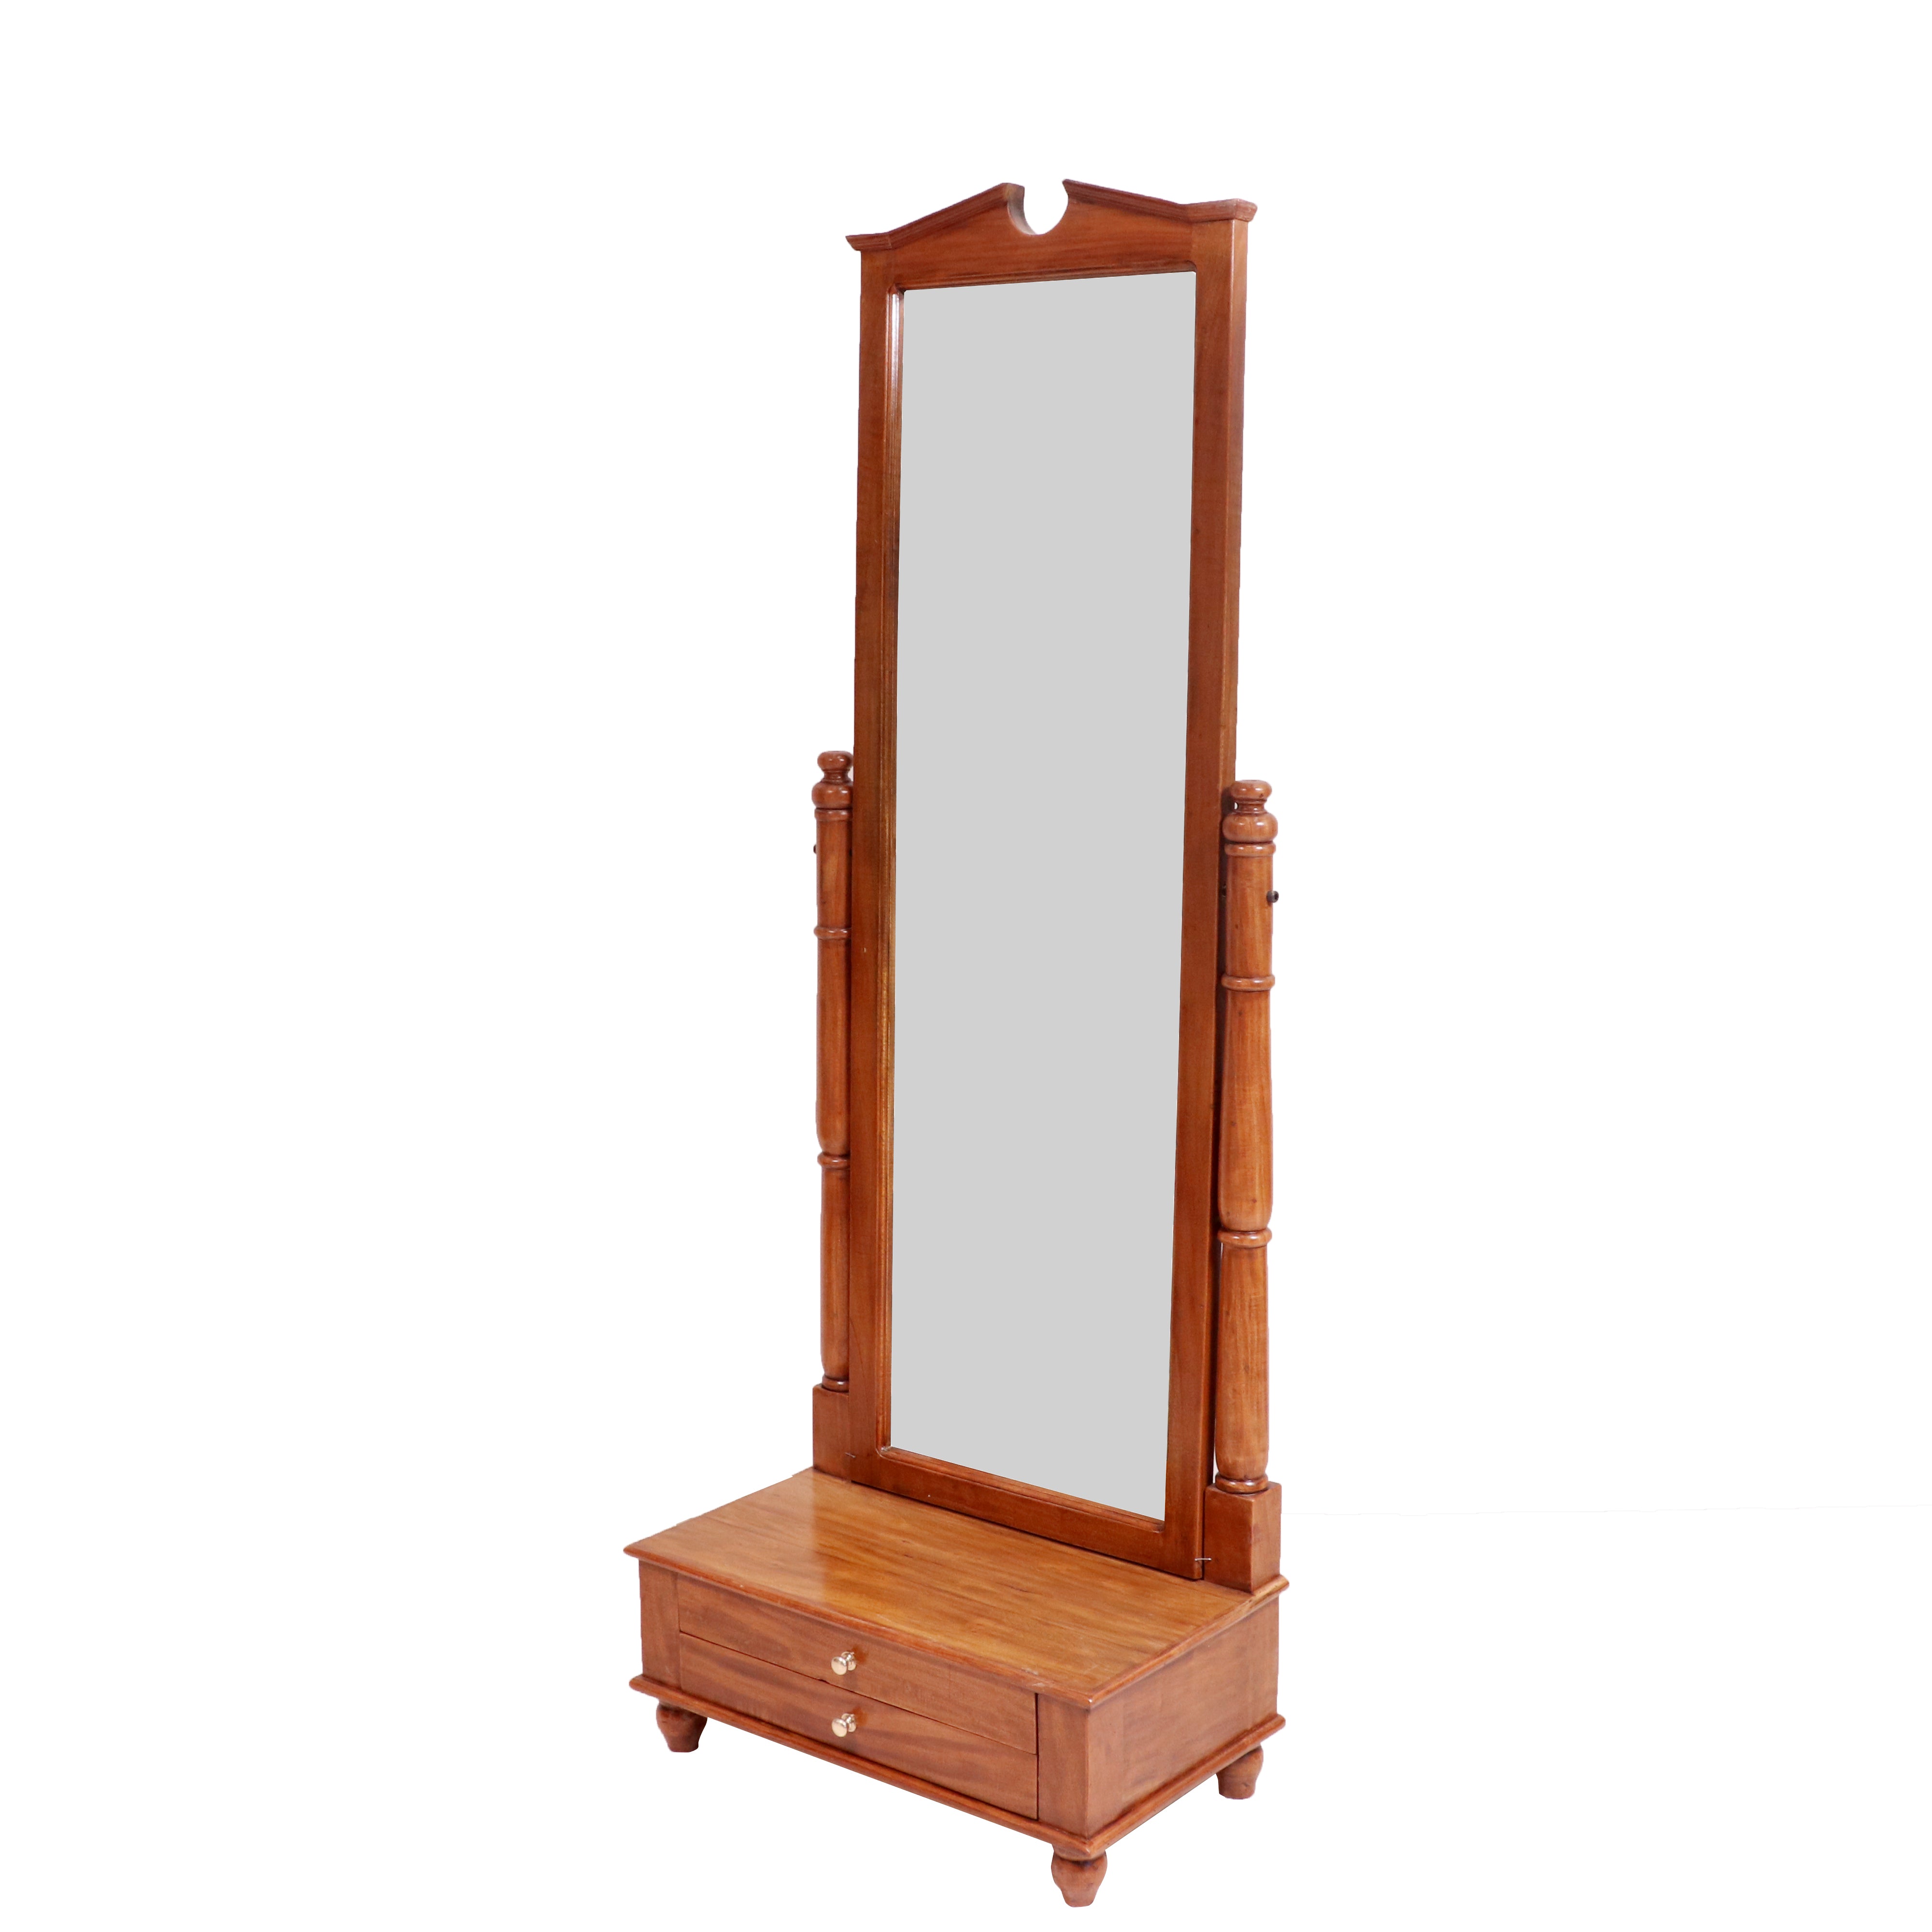 Compact teak wood revolving mirror stylish sleek dressing table Dressing Table